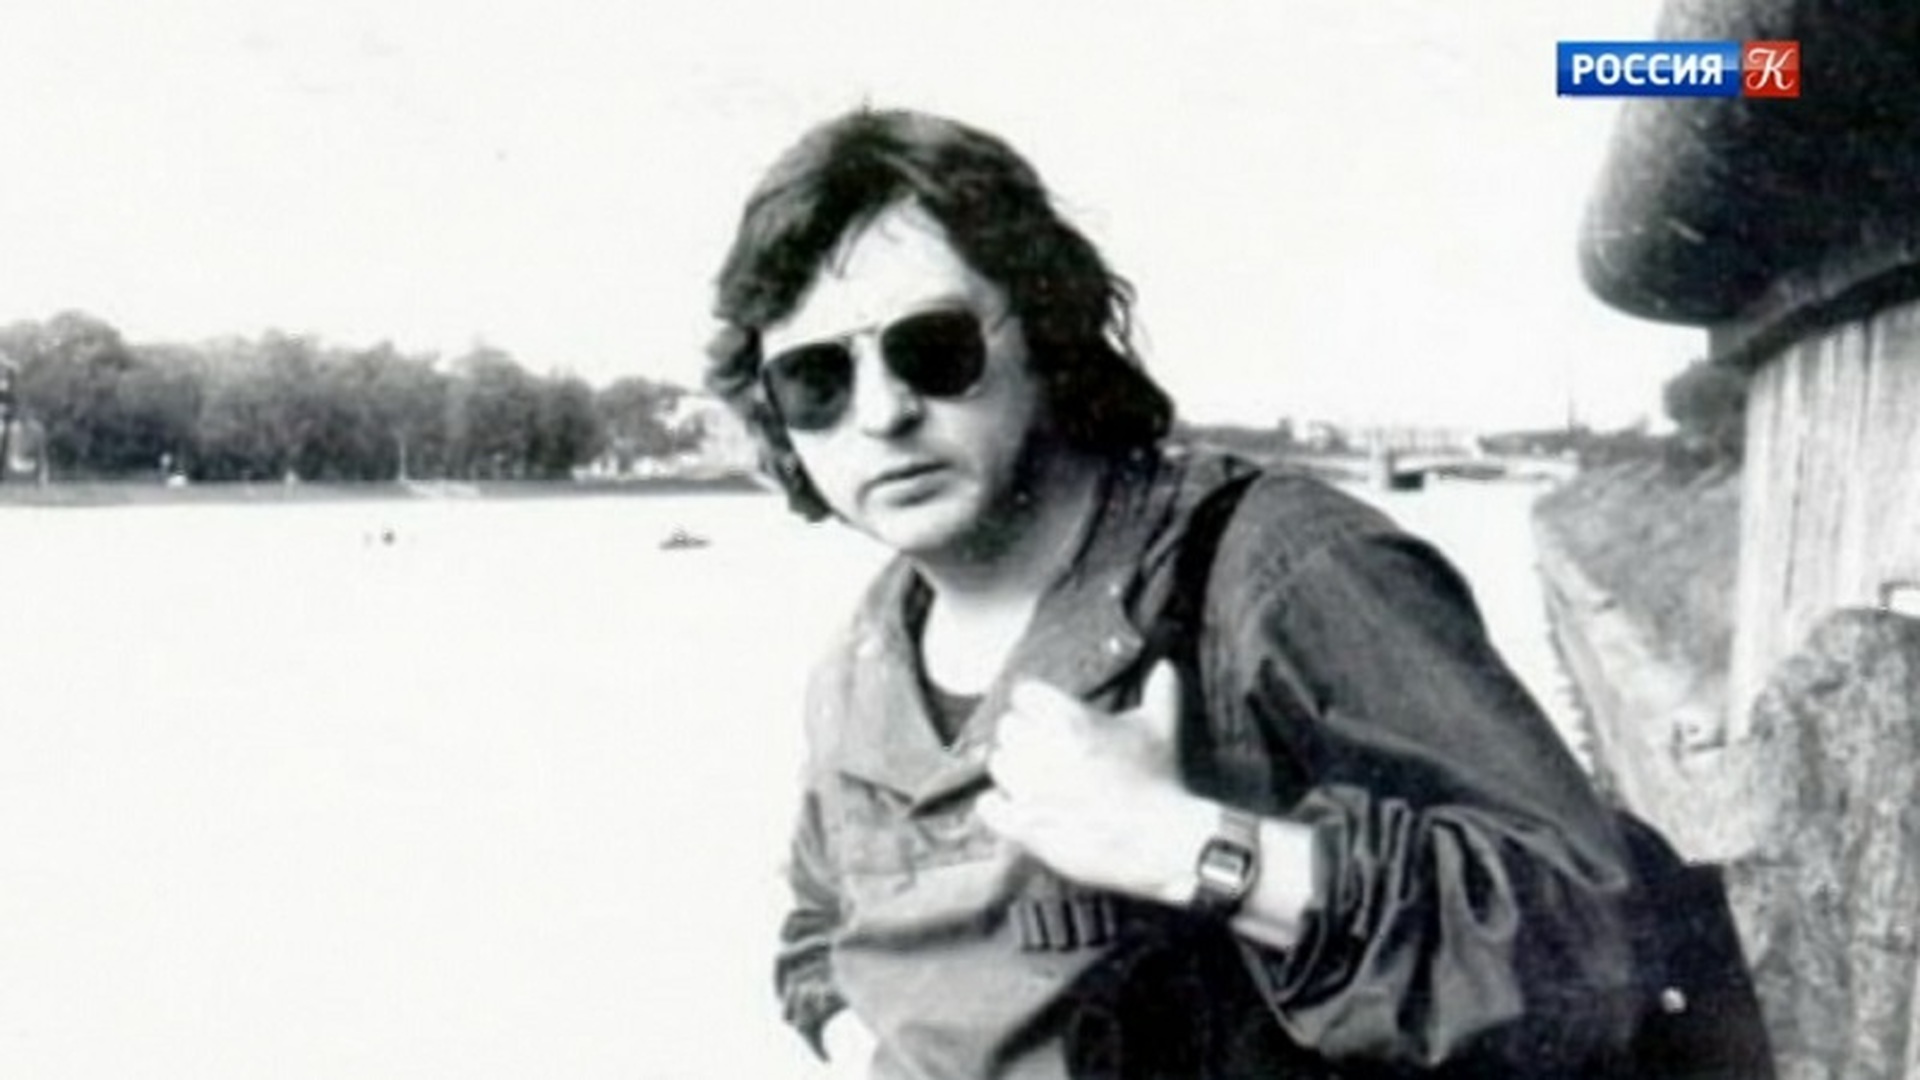 Майк Науменко 1991